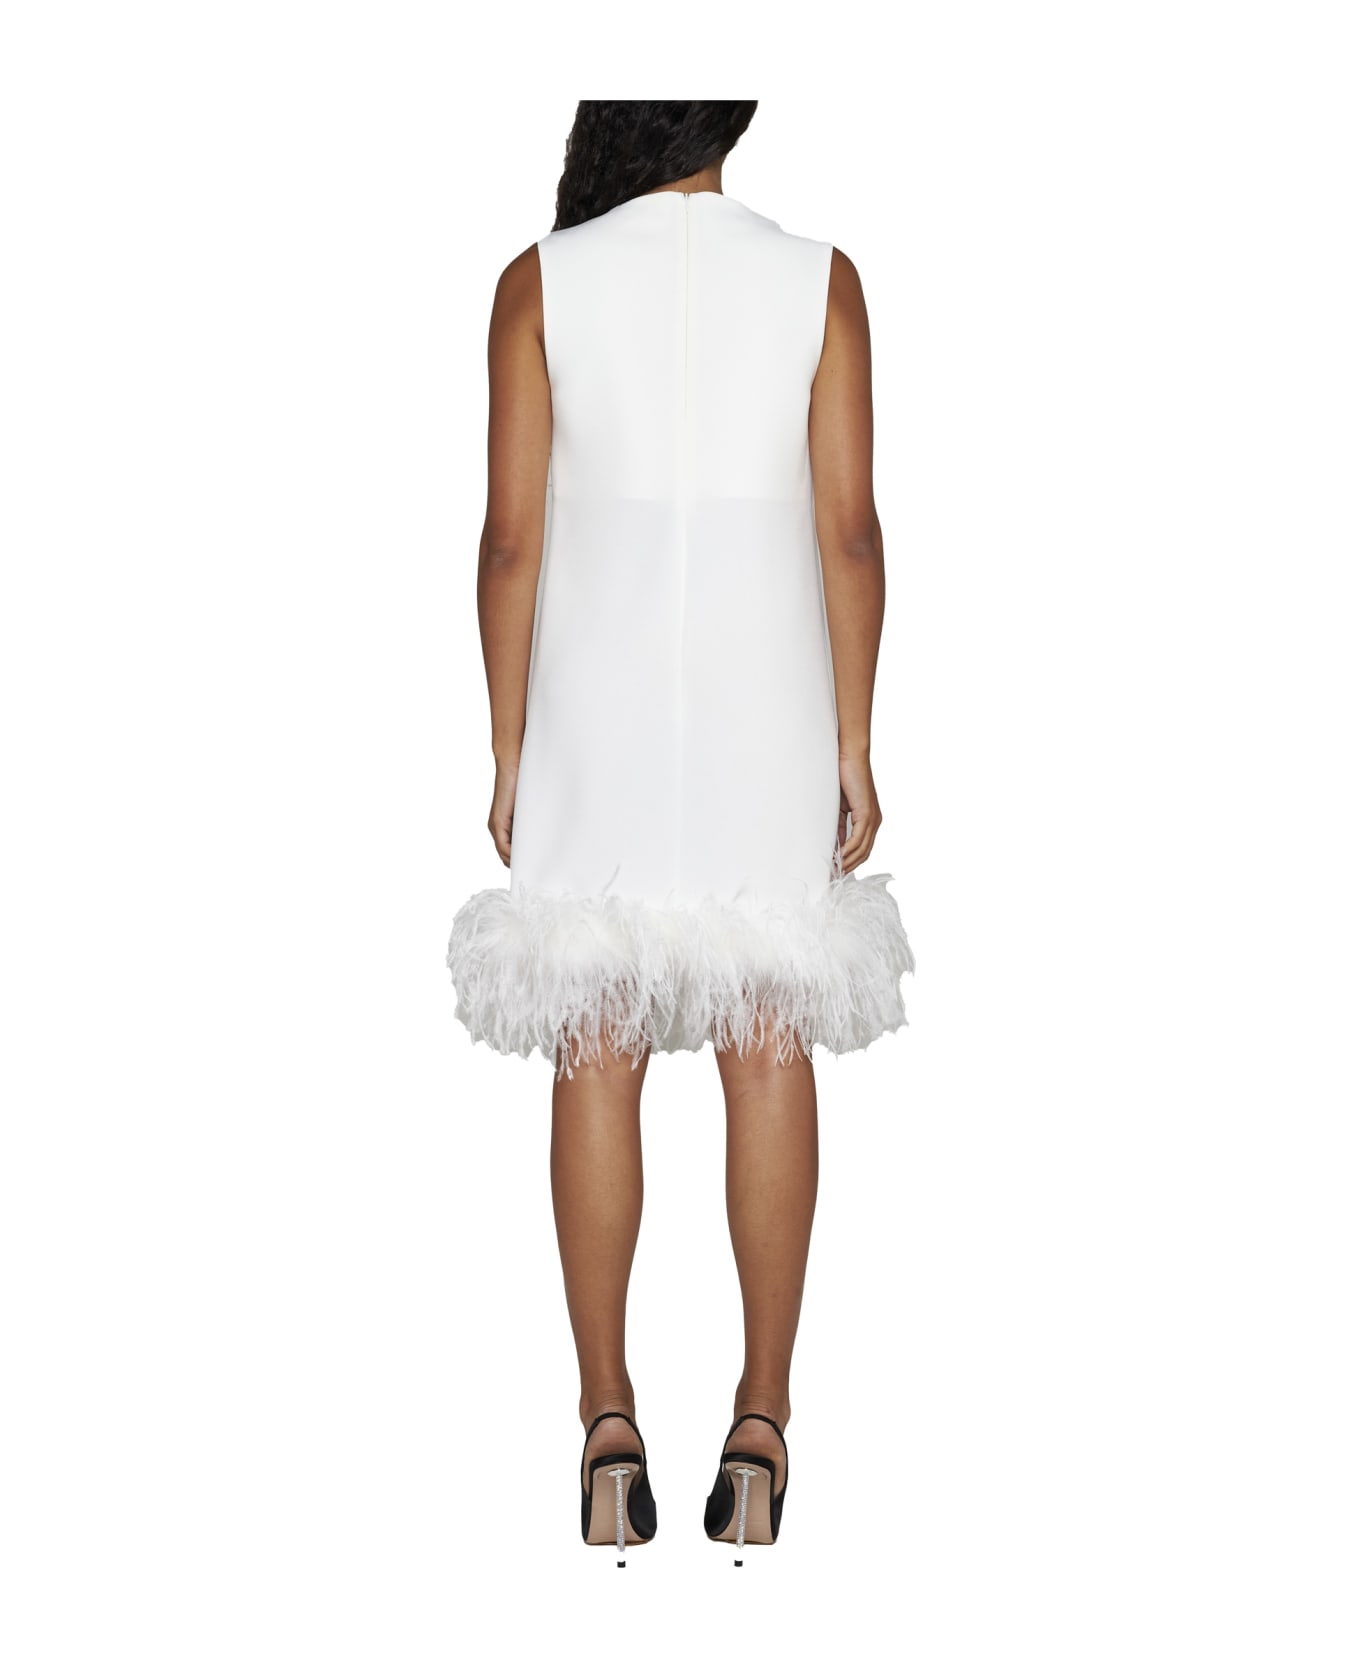 Parosh Dress With Feathers - Panna